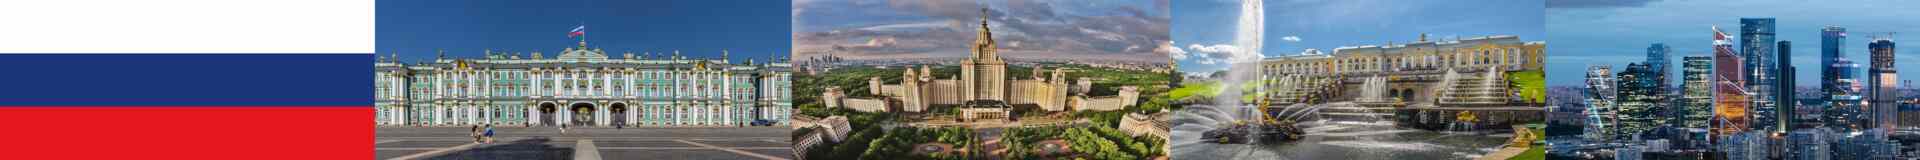 Global Russia Construction Work Tenders